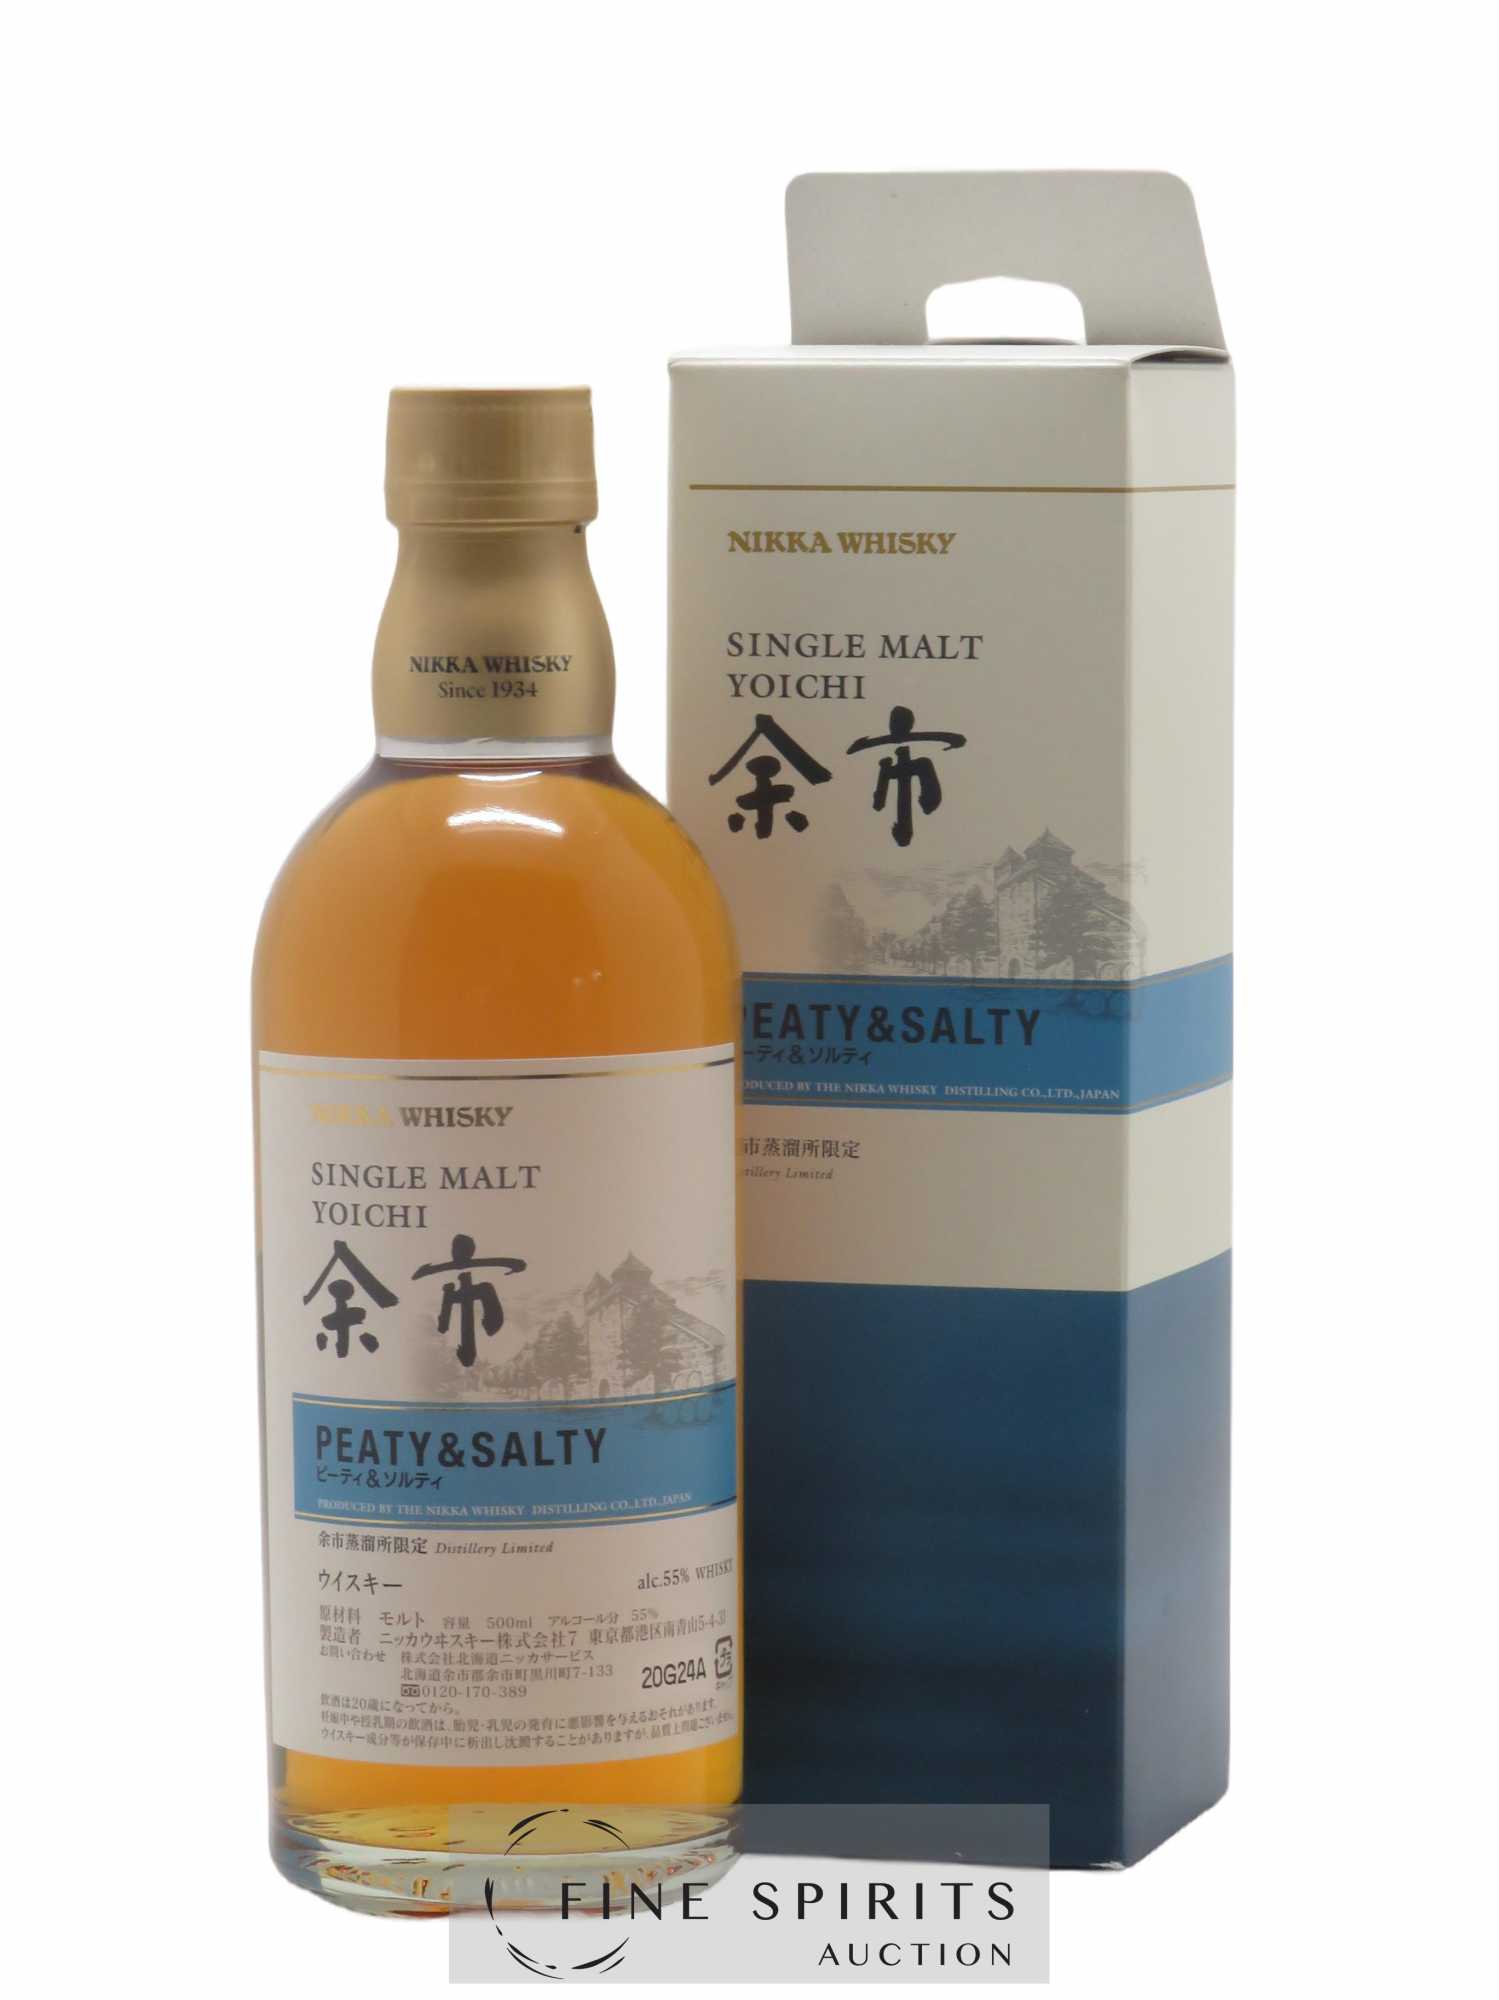 Yoichi Of. Peaty & Salty Distillery Limited Nikka Whisky (50cl.)